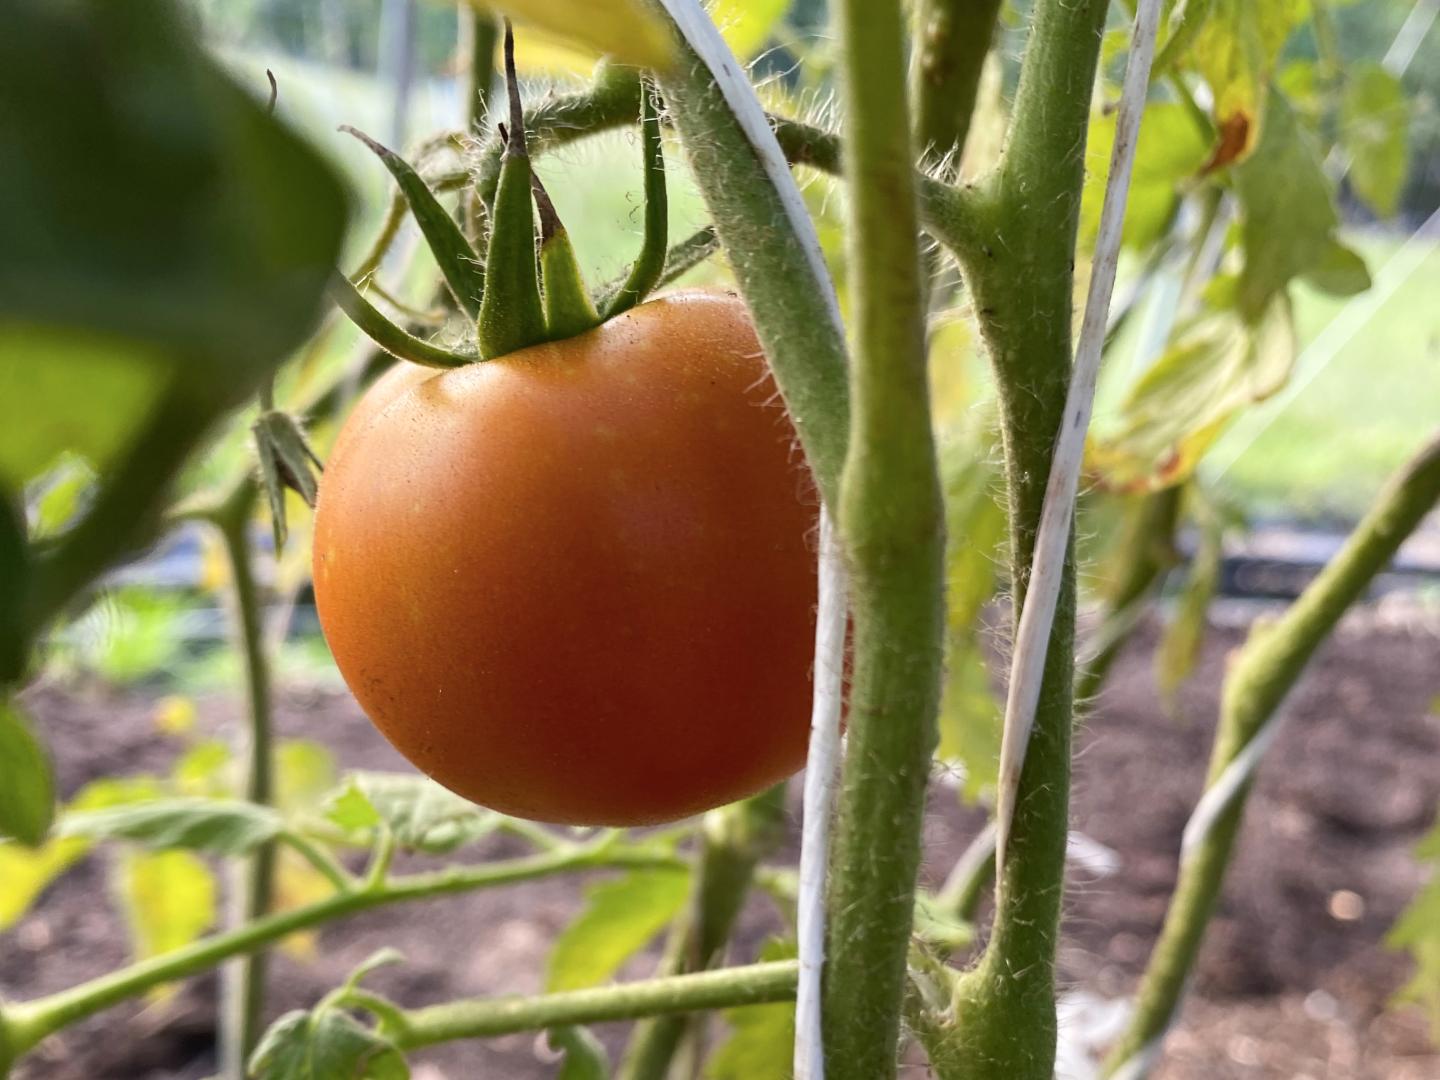 Ripe tomato on the plant